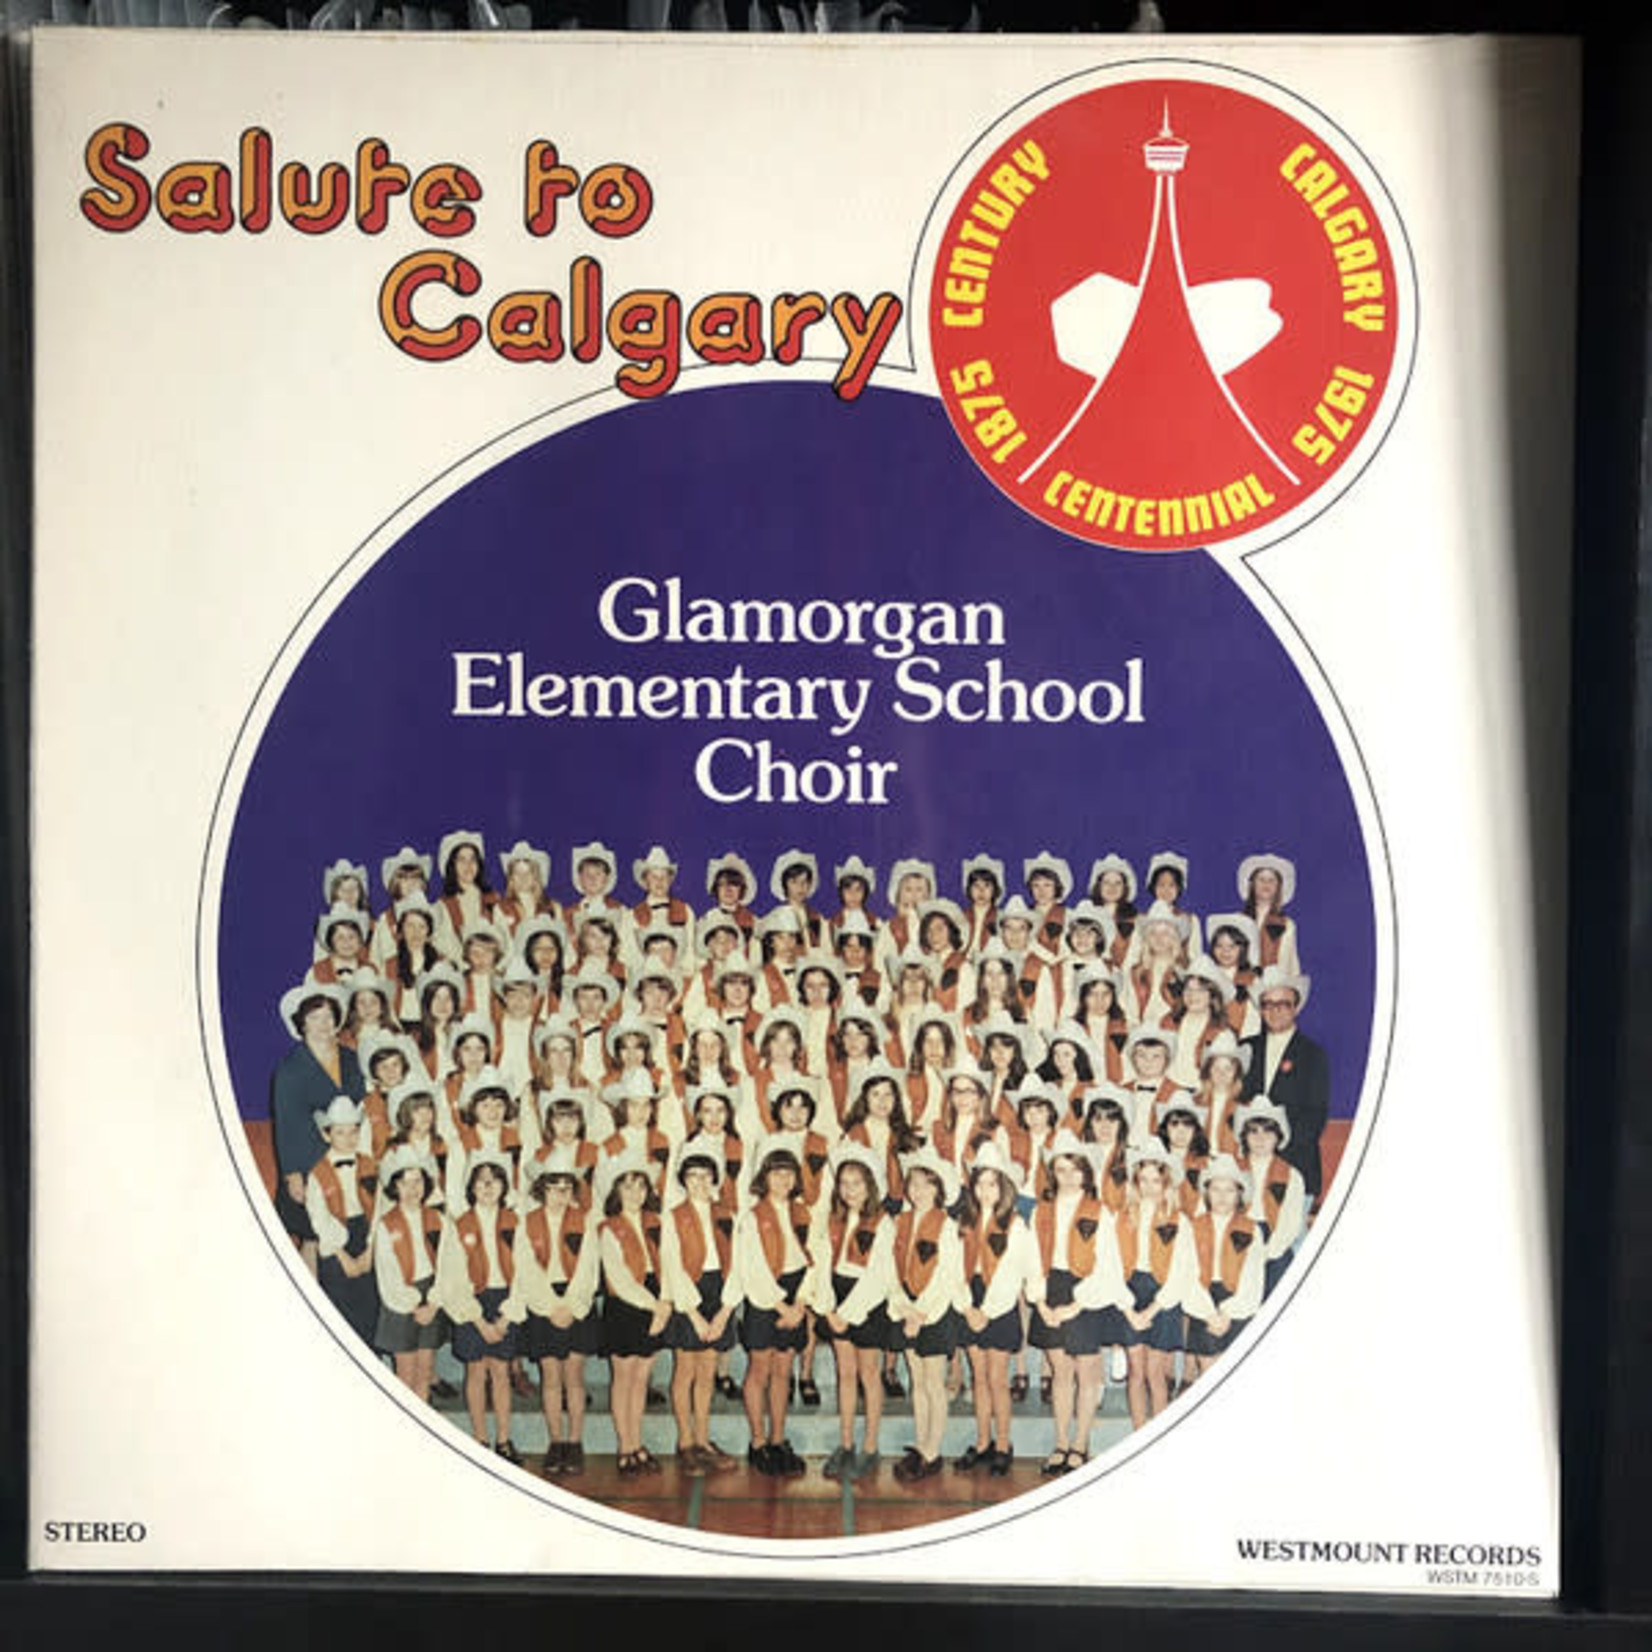 Calgary Glamorgan Elementary School Choir – Salute To Calgary (VG)